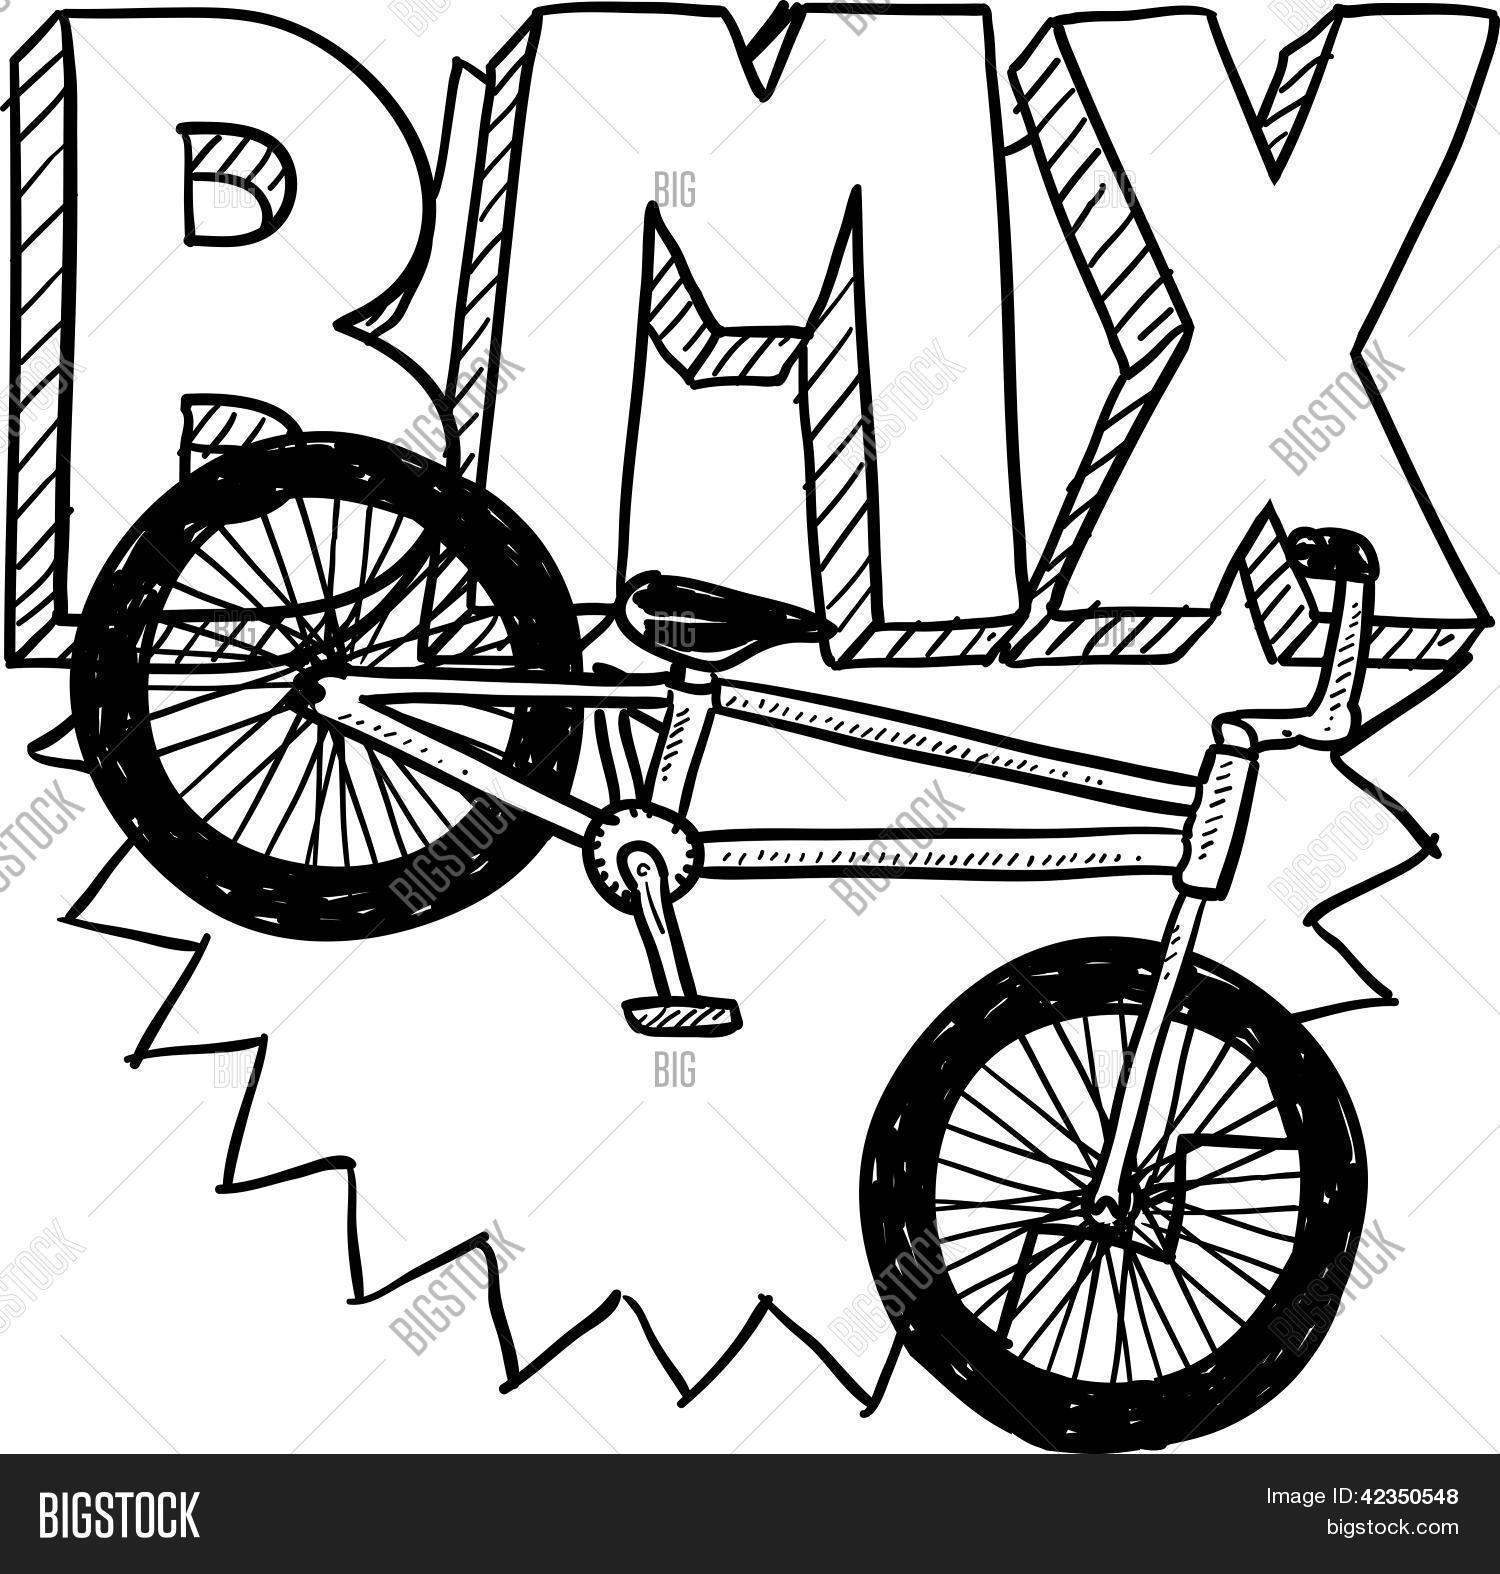 Bmx Bike Drawing at GetDrawings Free download